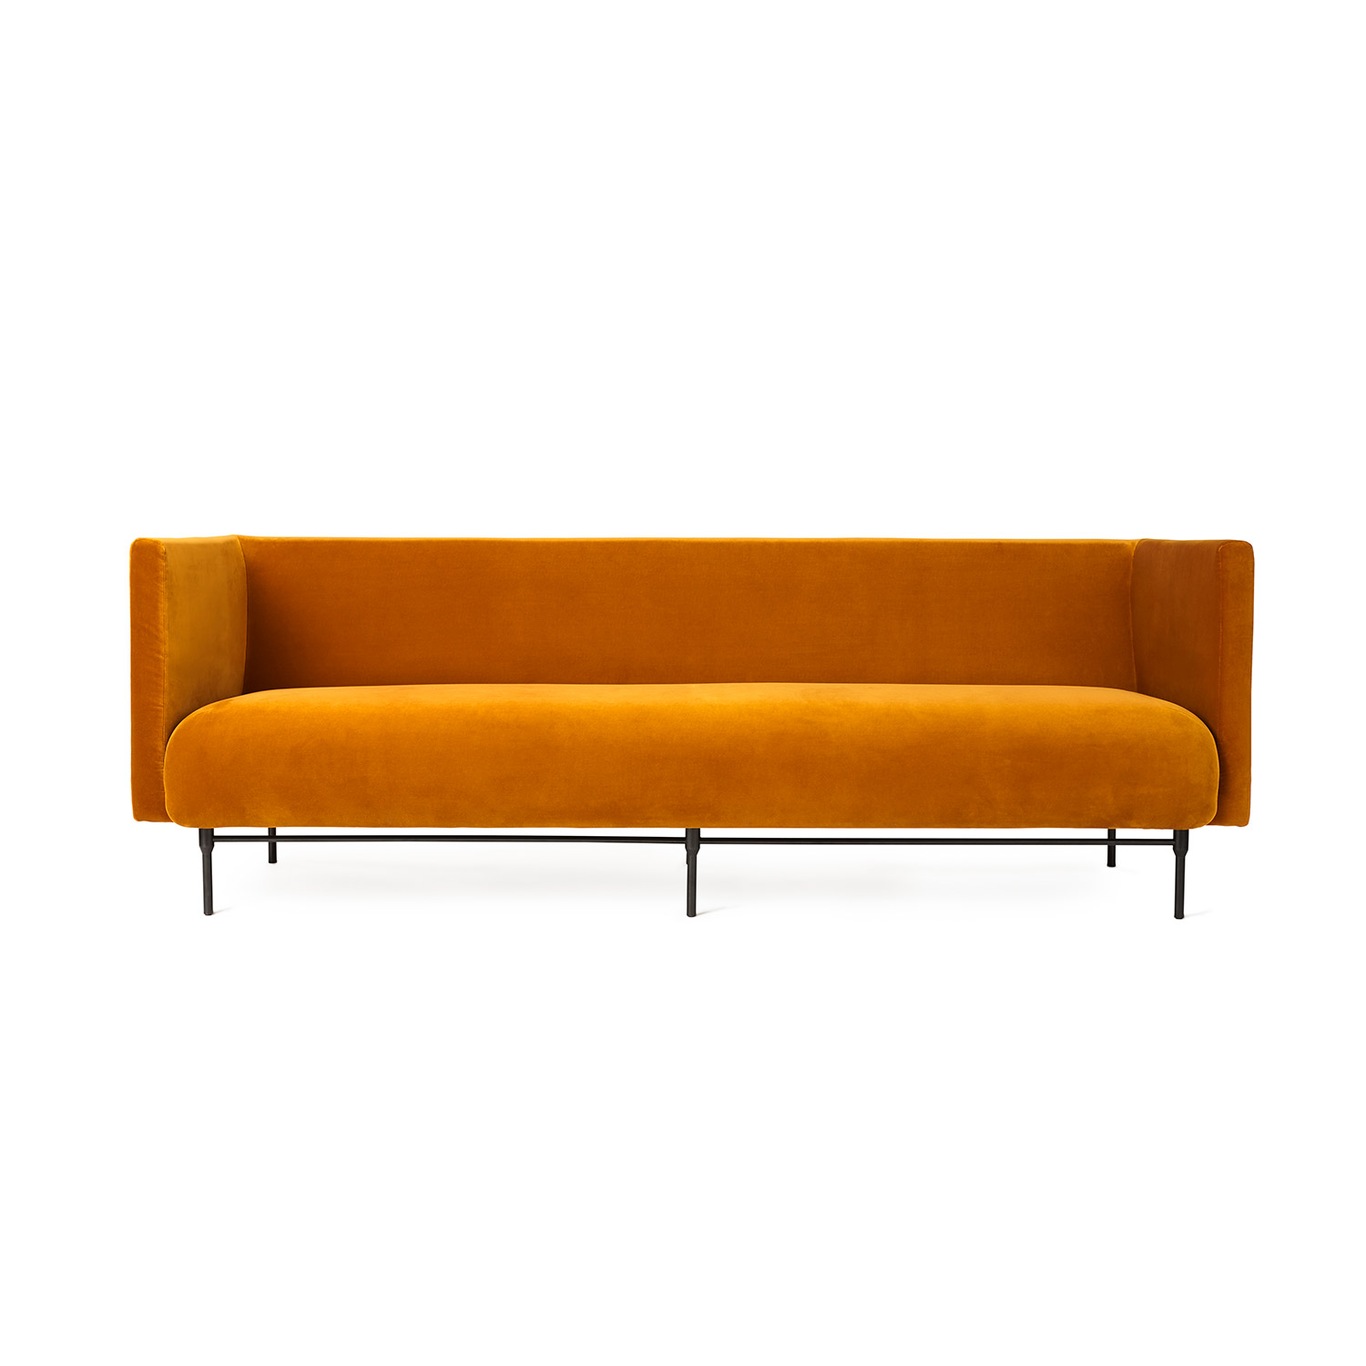 Galore 3-Seter Sofa, Amber